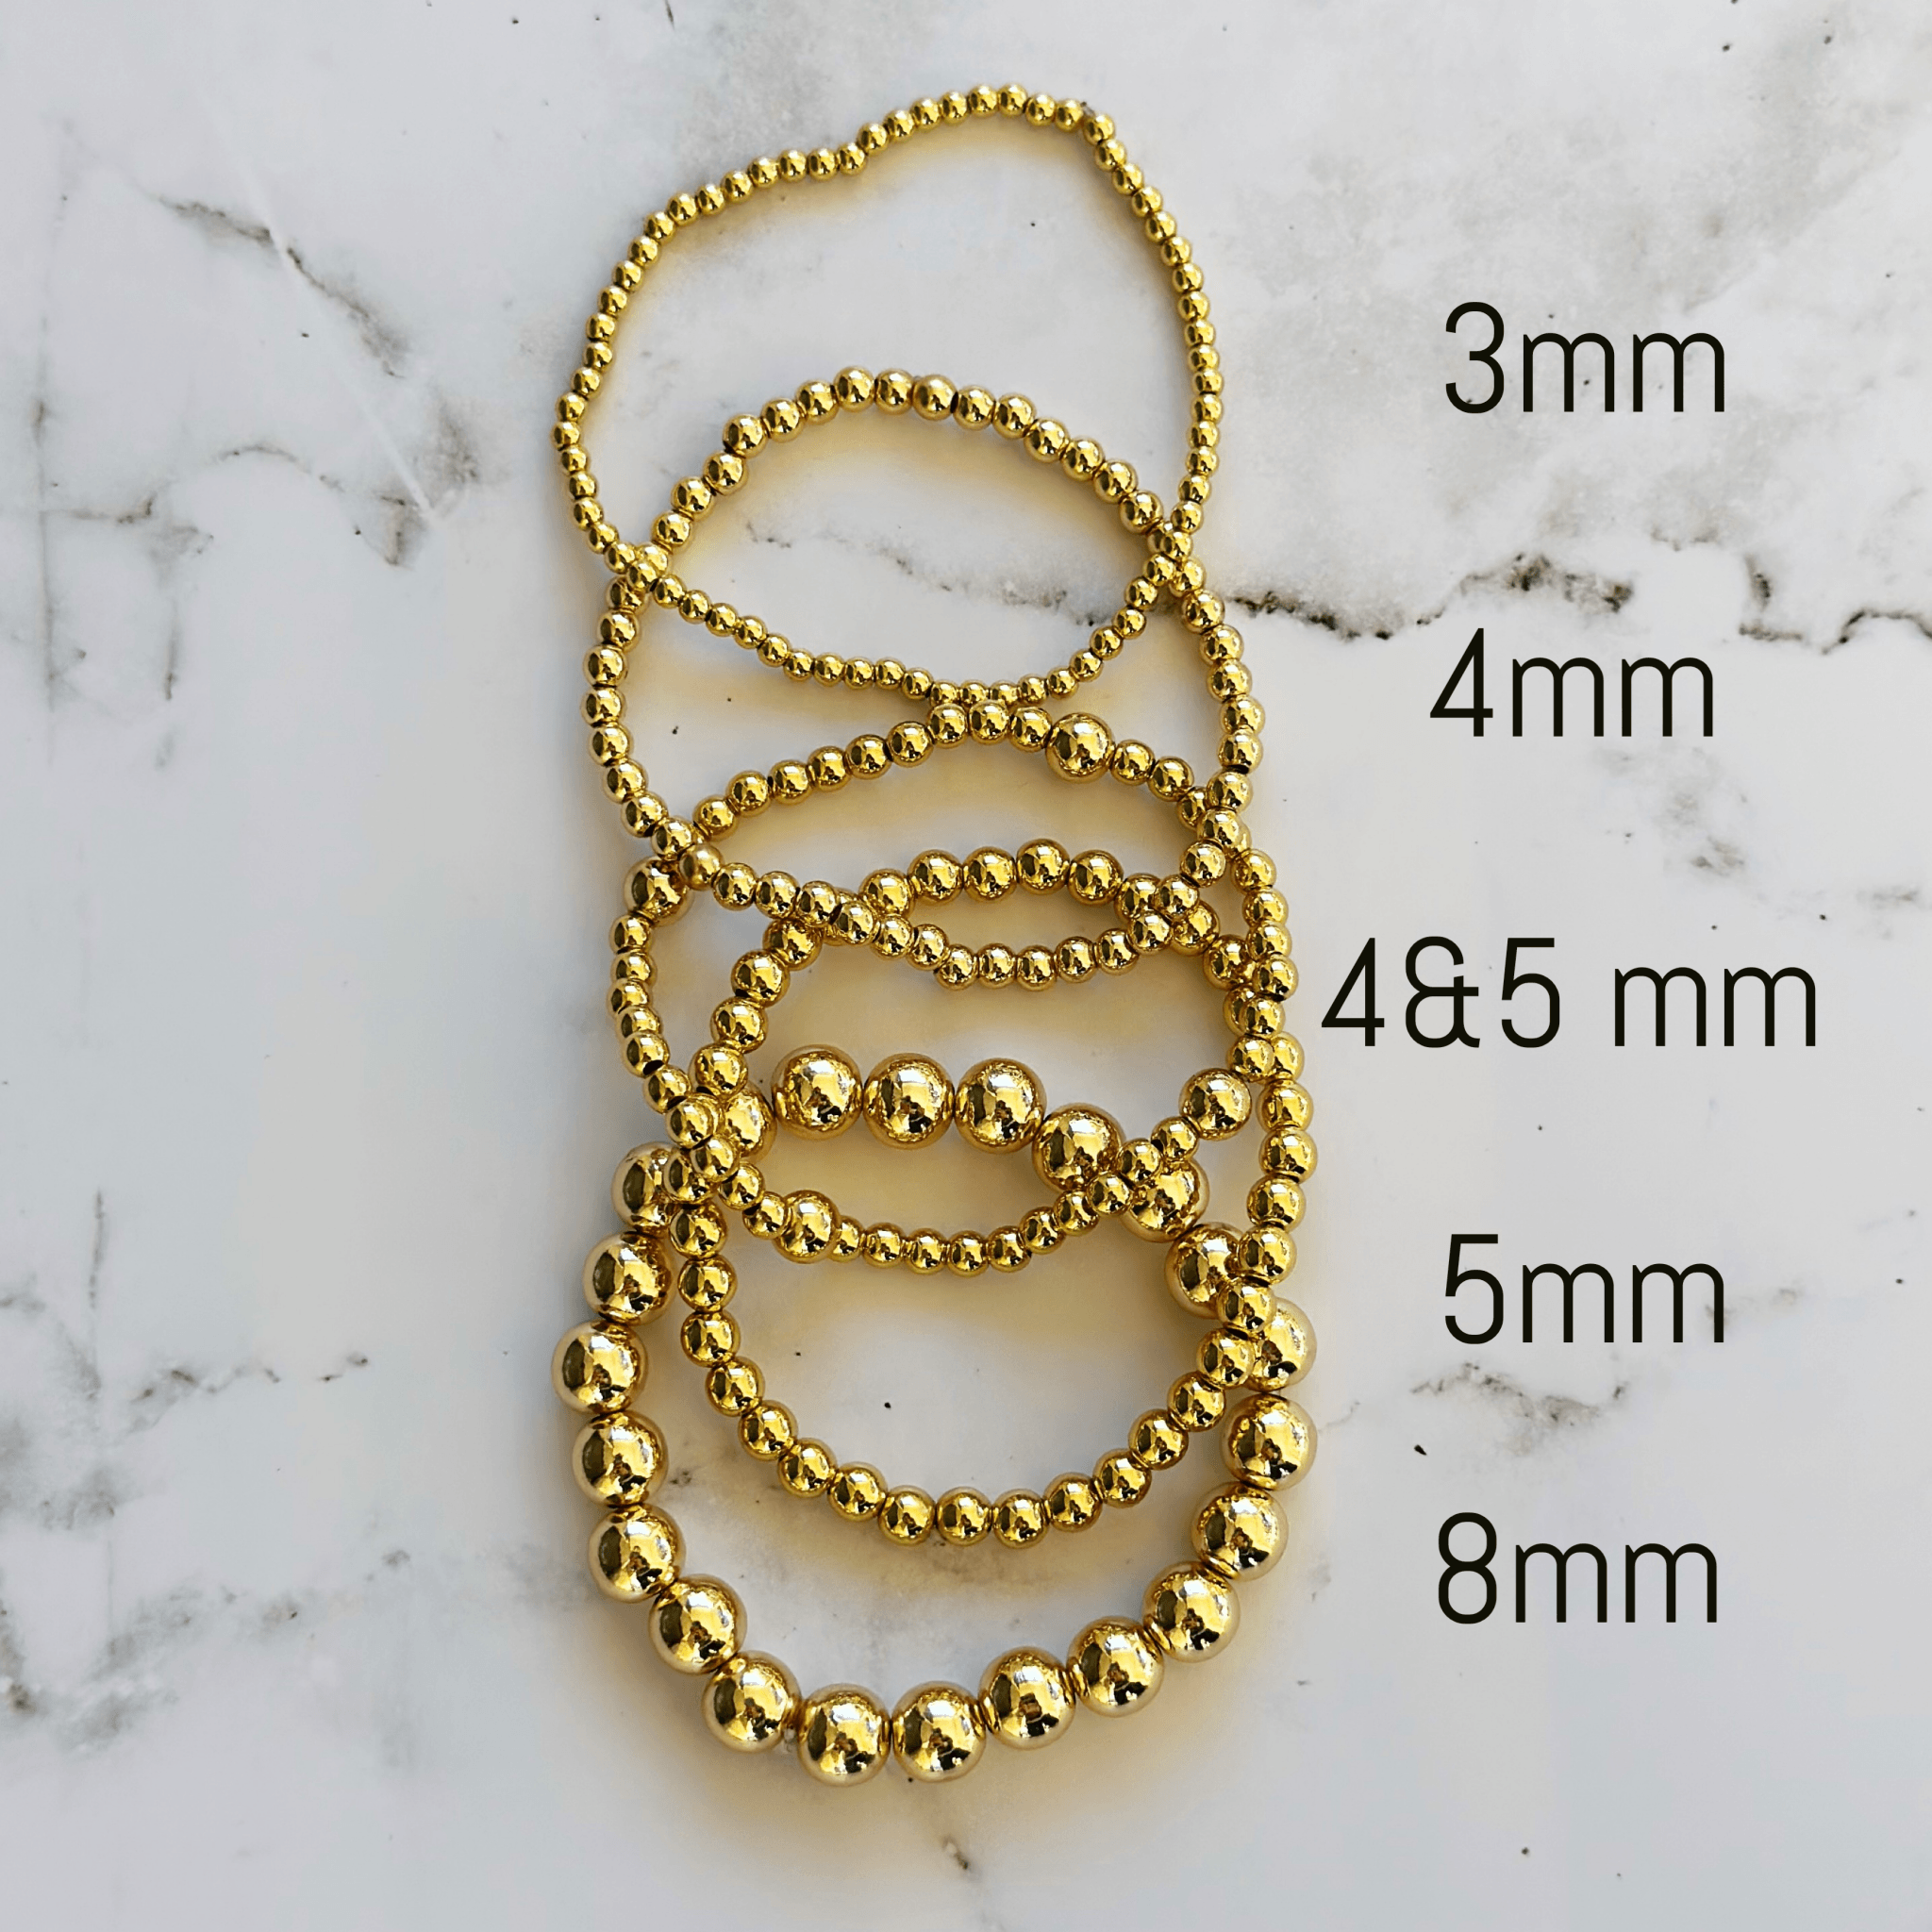 4mm Bead Bracelet